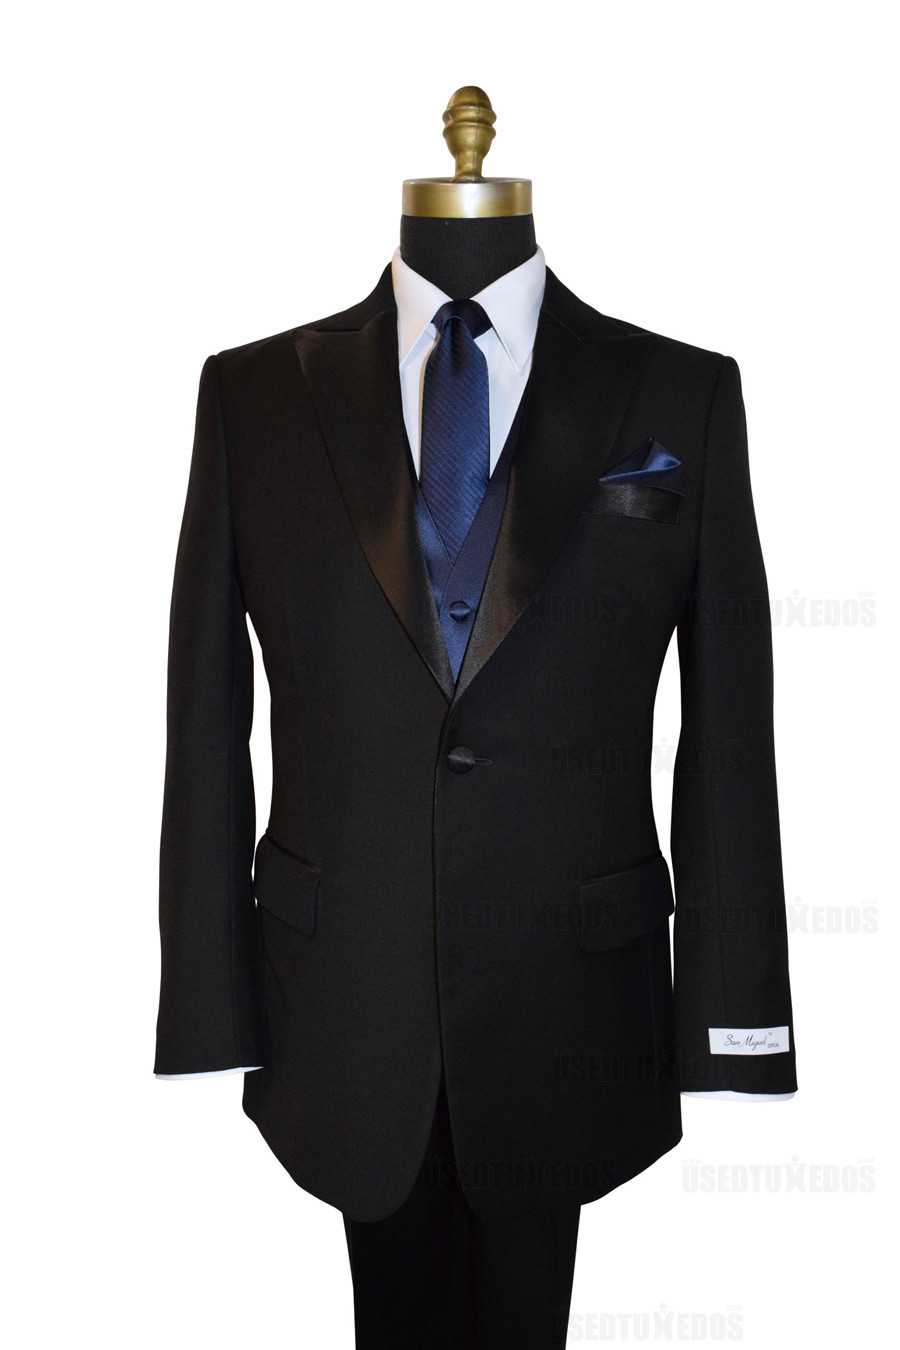 black San Miguel peak lapel tuxedo with navy blue long dress tie by San Miguel Formals